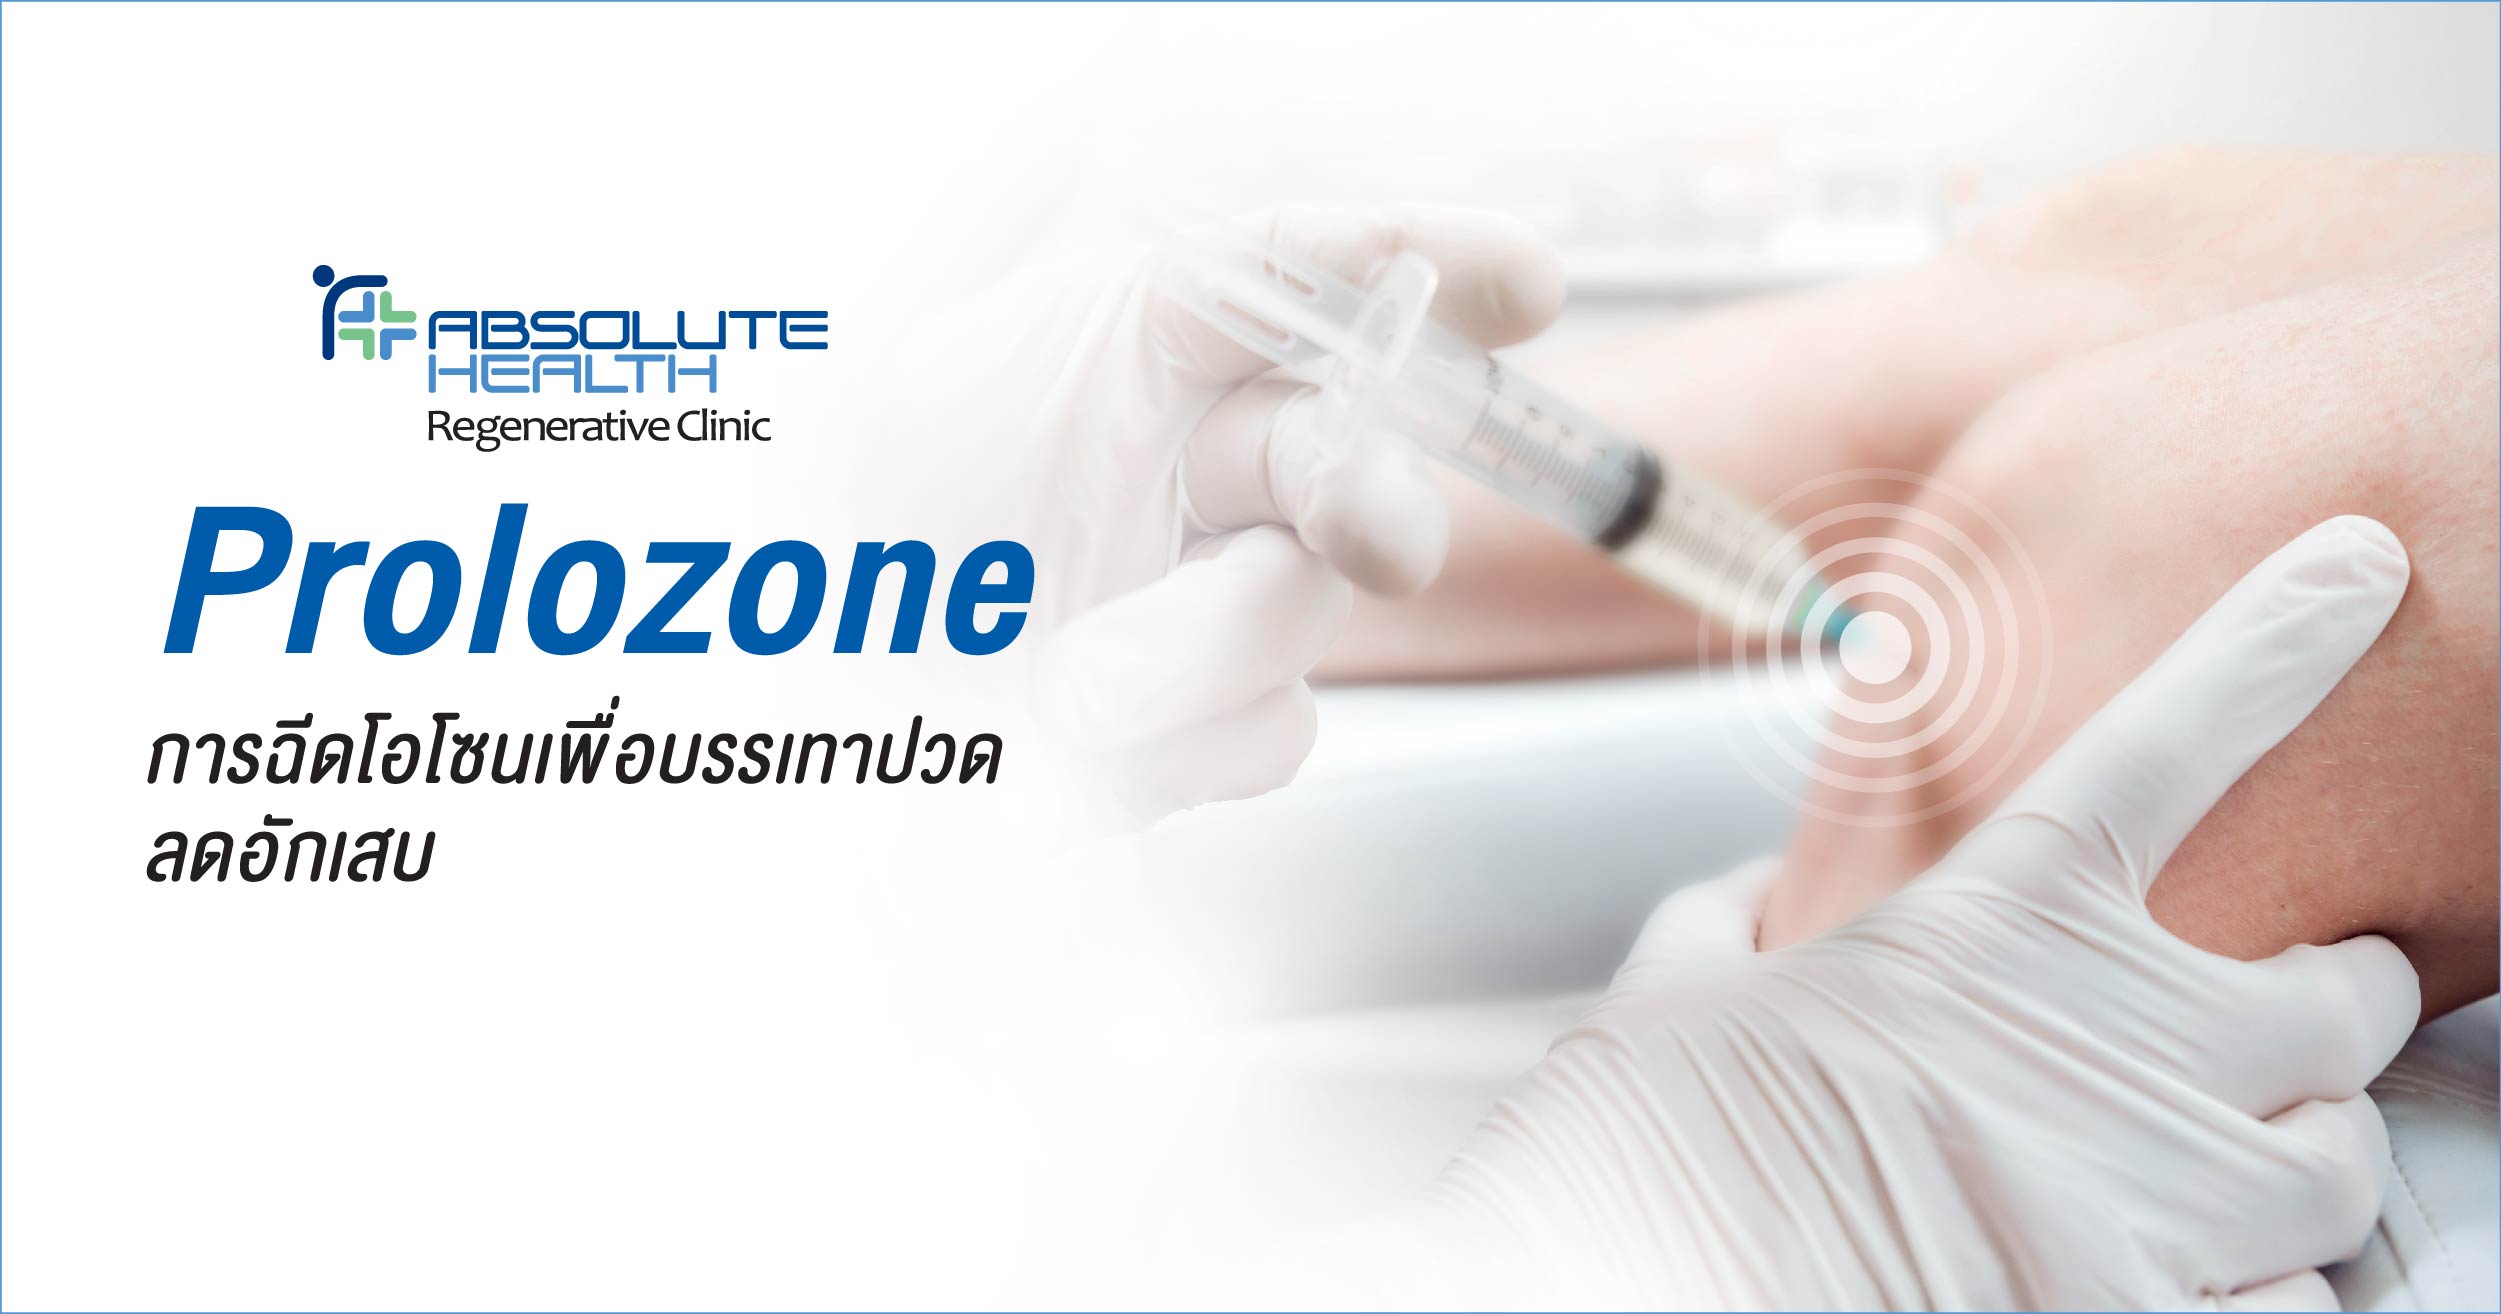 Prolozone การฉีดโอโซนเพื่อบรรเทาปวด ลดอักเสบ